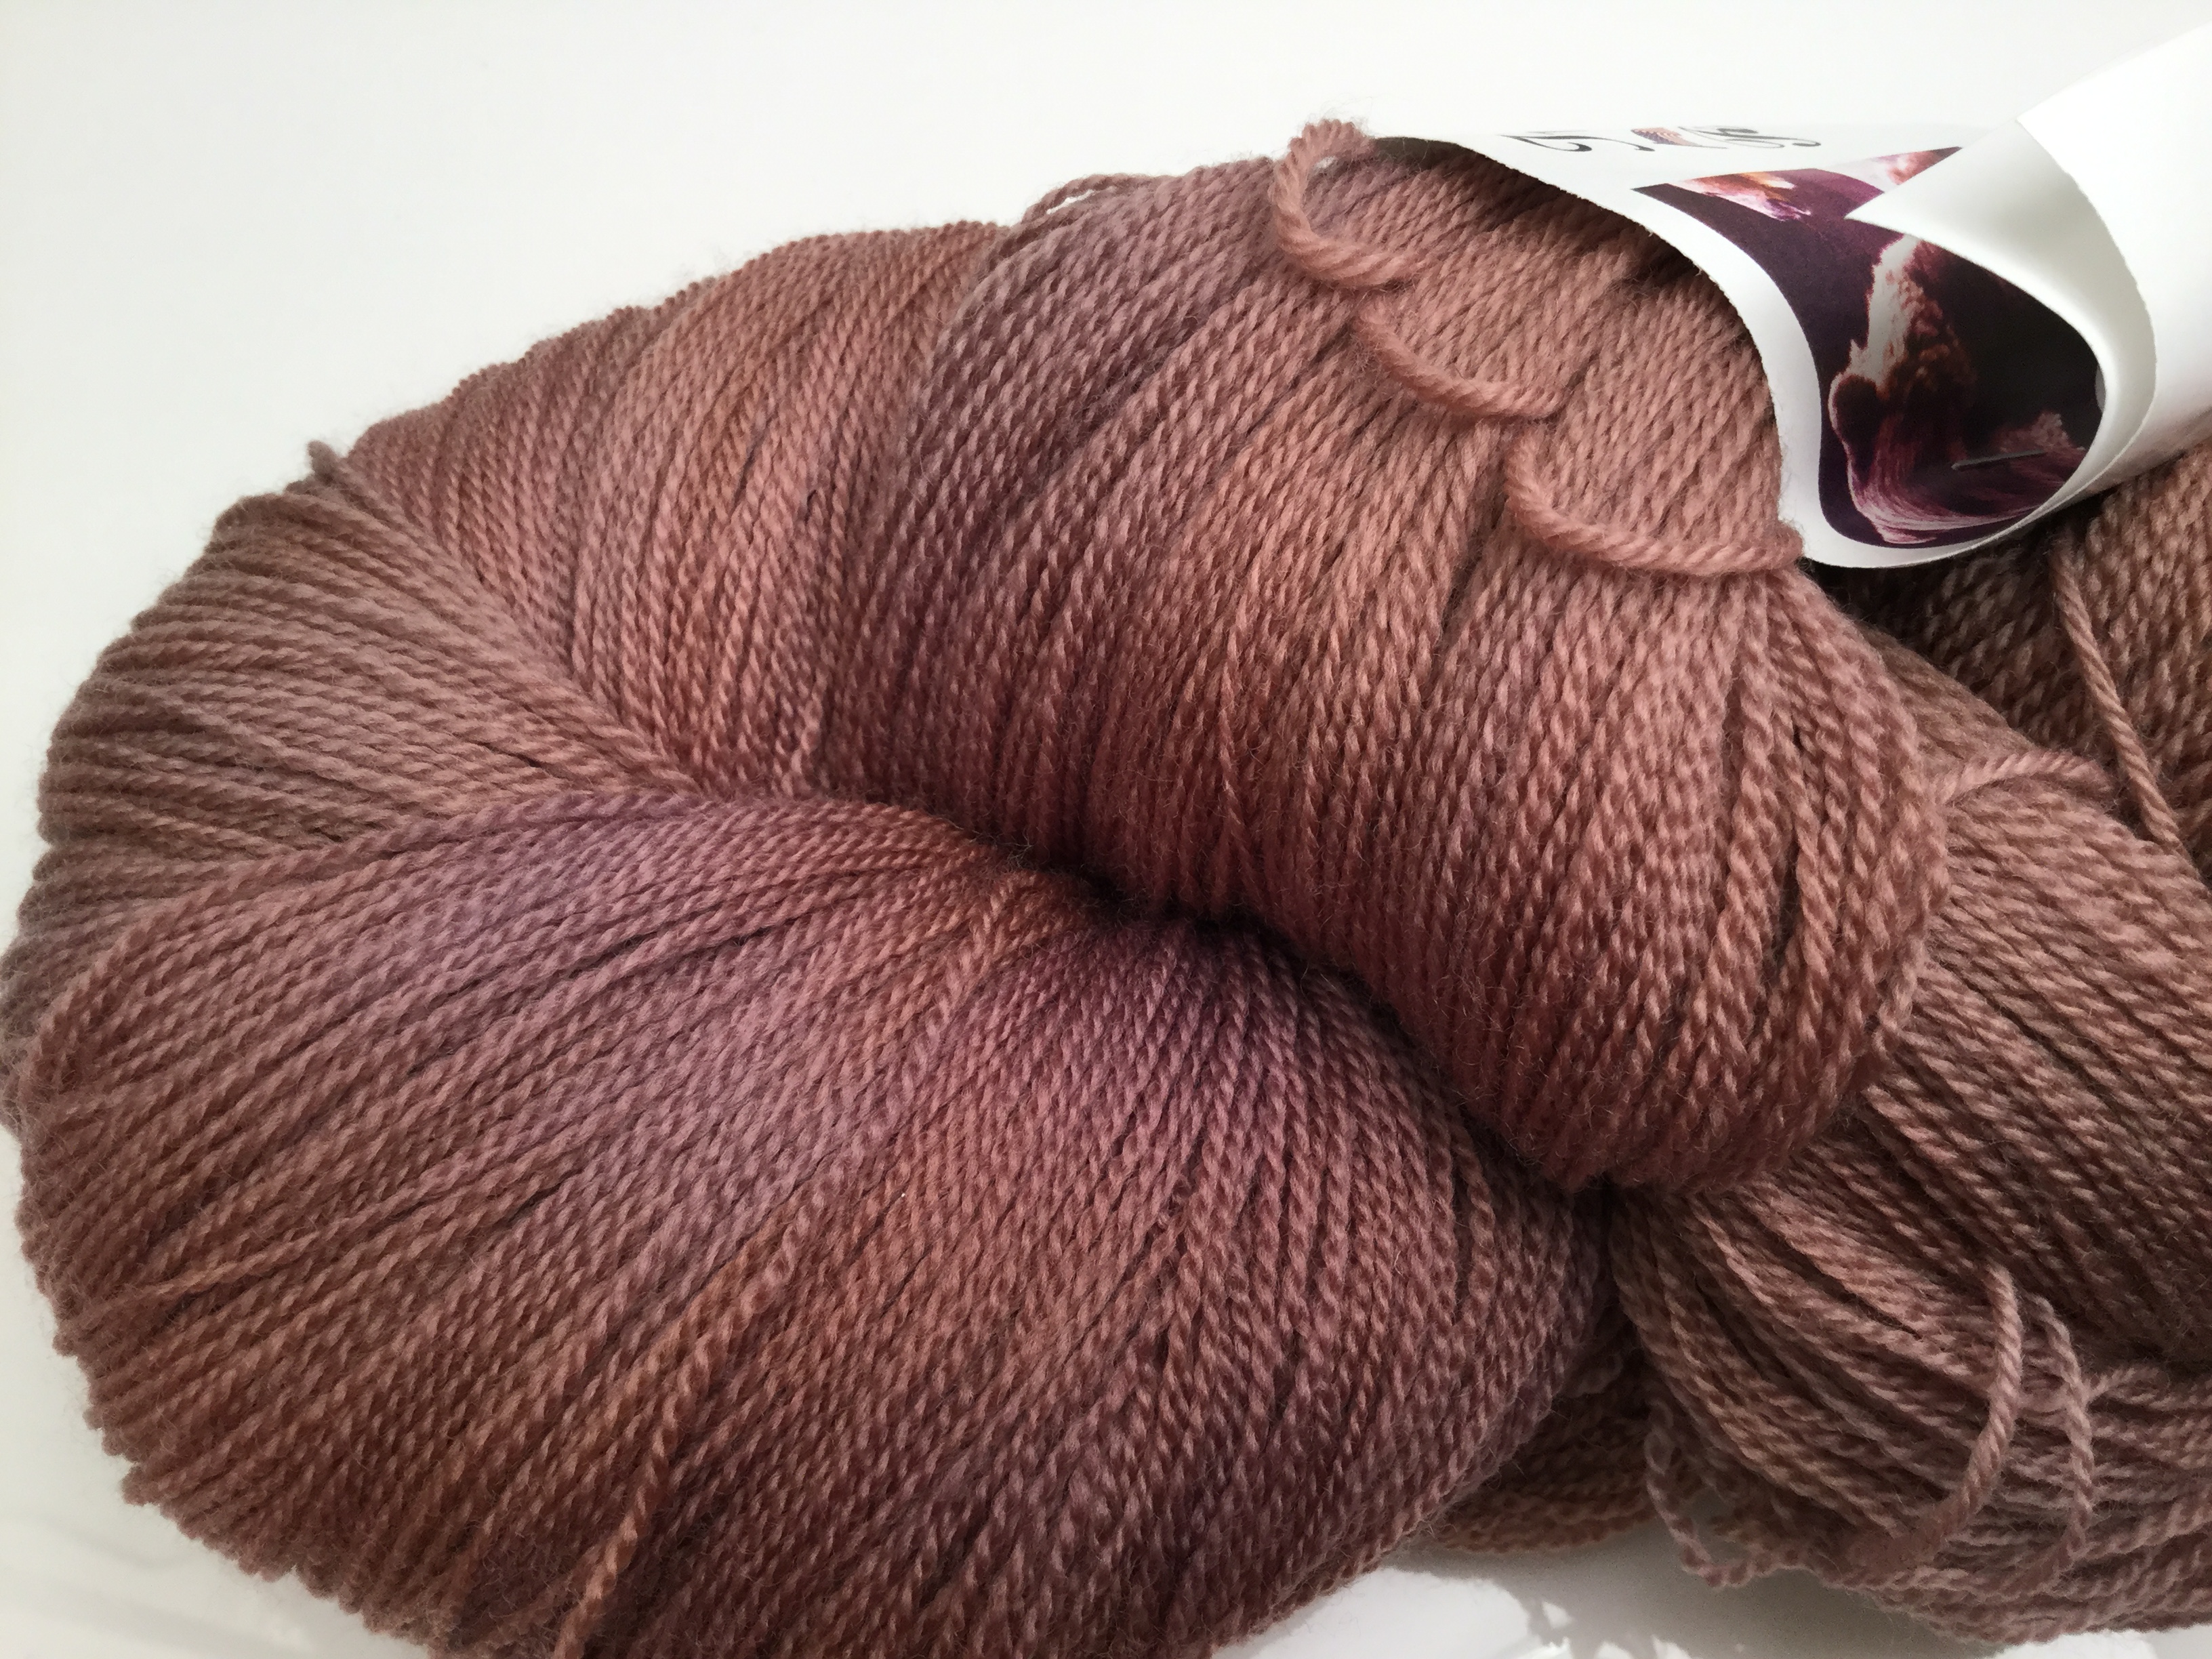 Ivy Brambles Romantica Merino Lace Yarn - 151 Bear